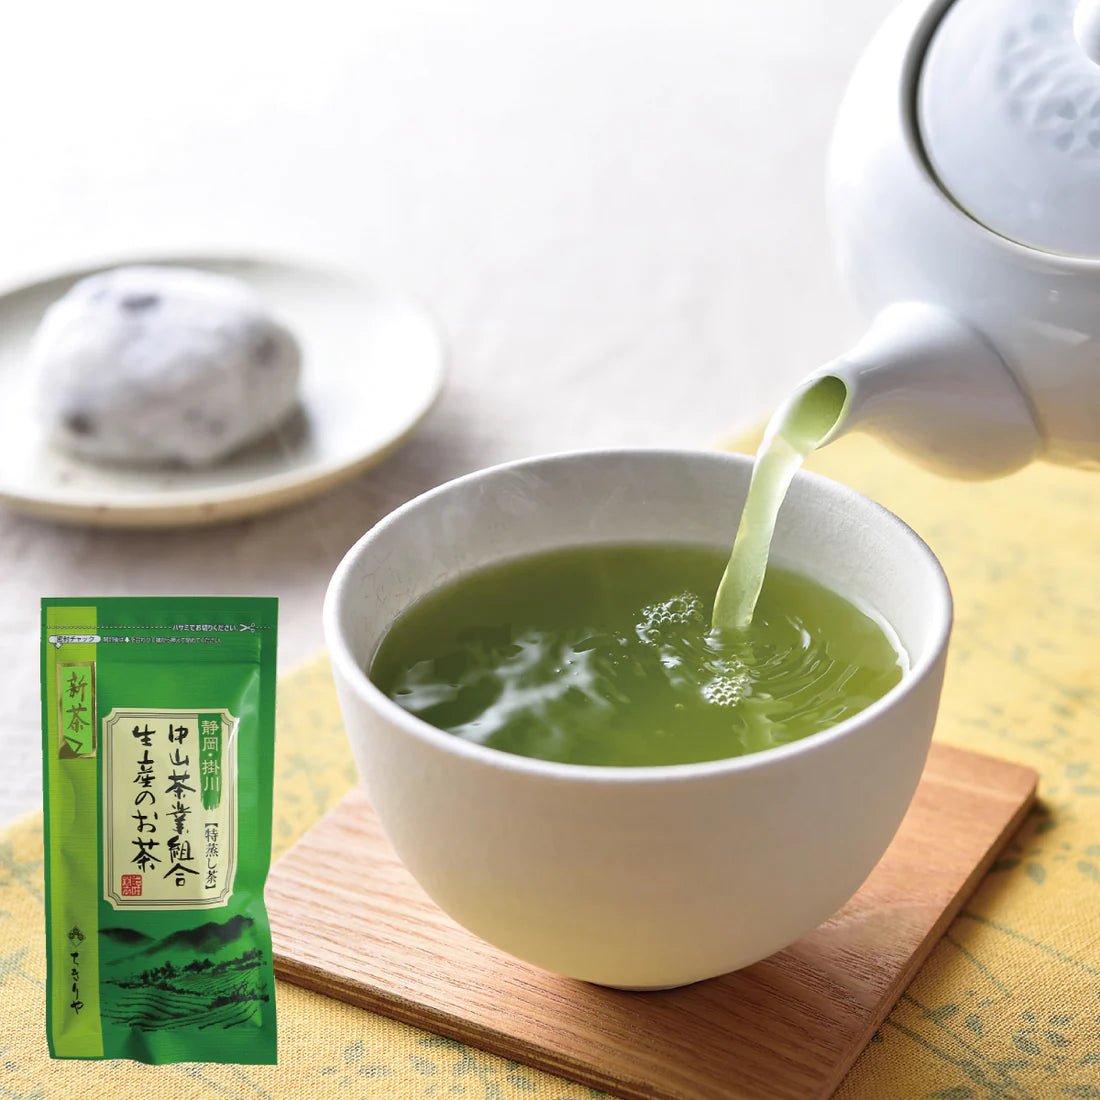 Shincha “Tokumushi” from Nakayama Tea Cooperative (special steamed Japanese green tea)